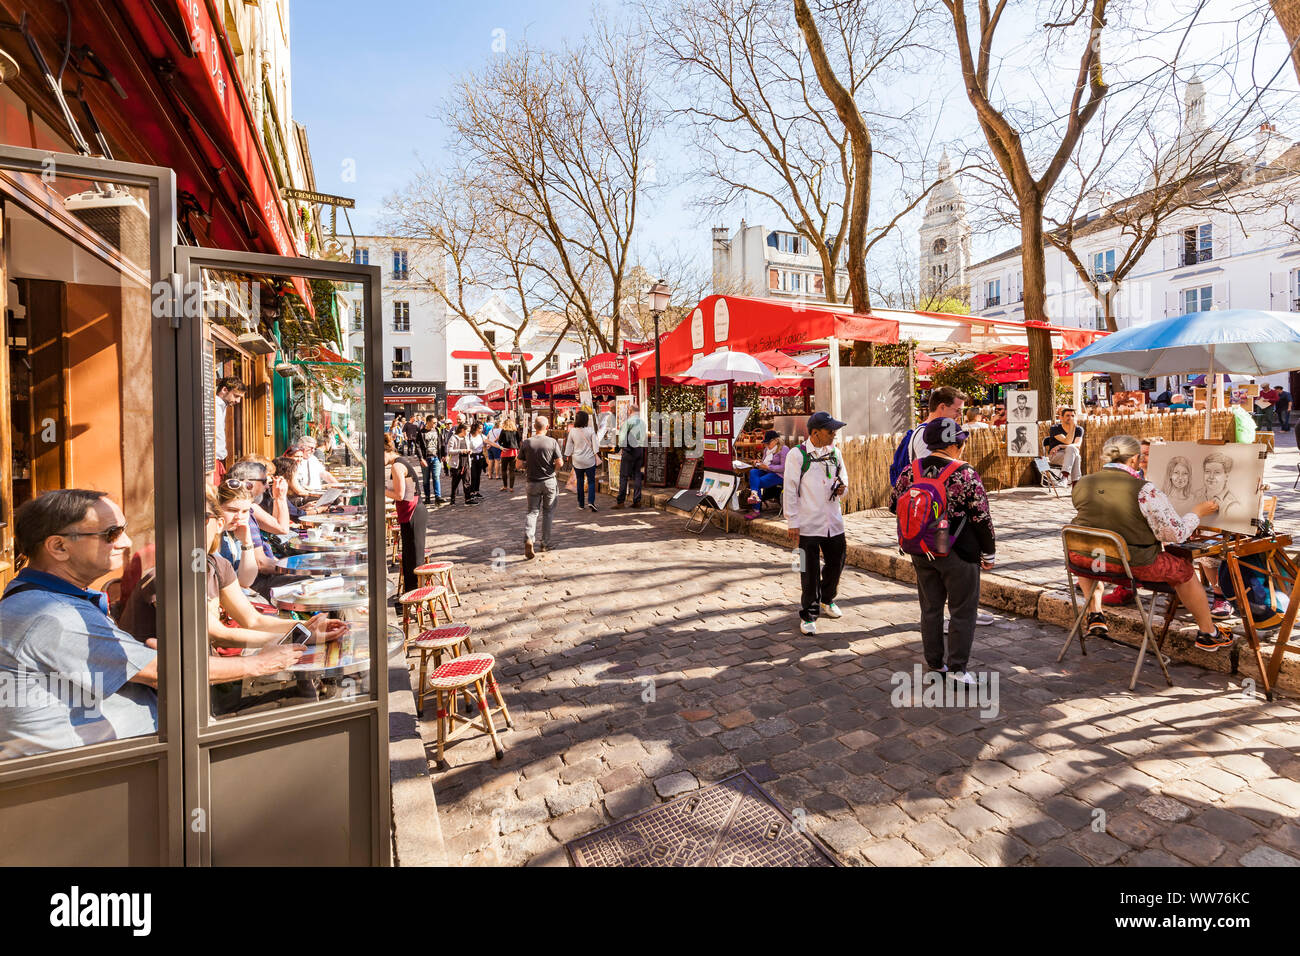 Frankreich, Paris, Montmartre, Place du Tertre, Straßencafe, Maler, street scene Stockfoto